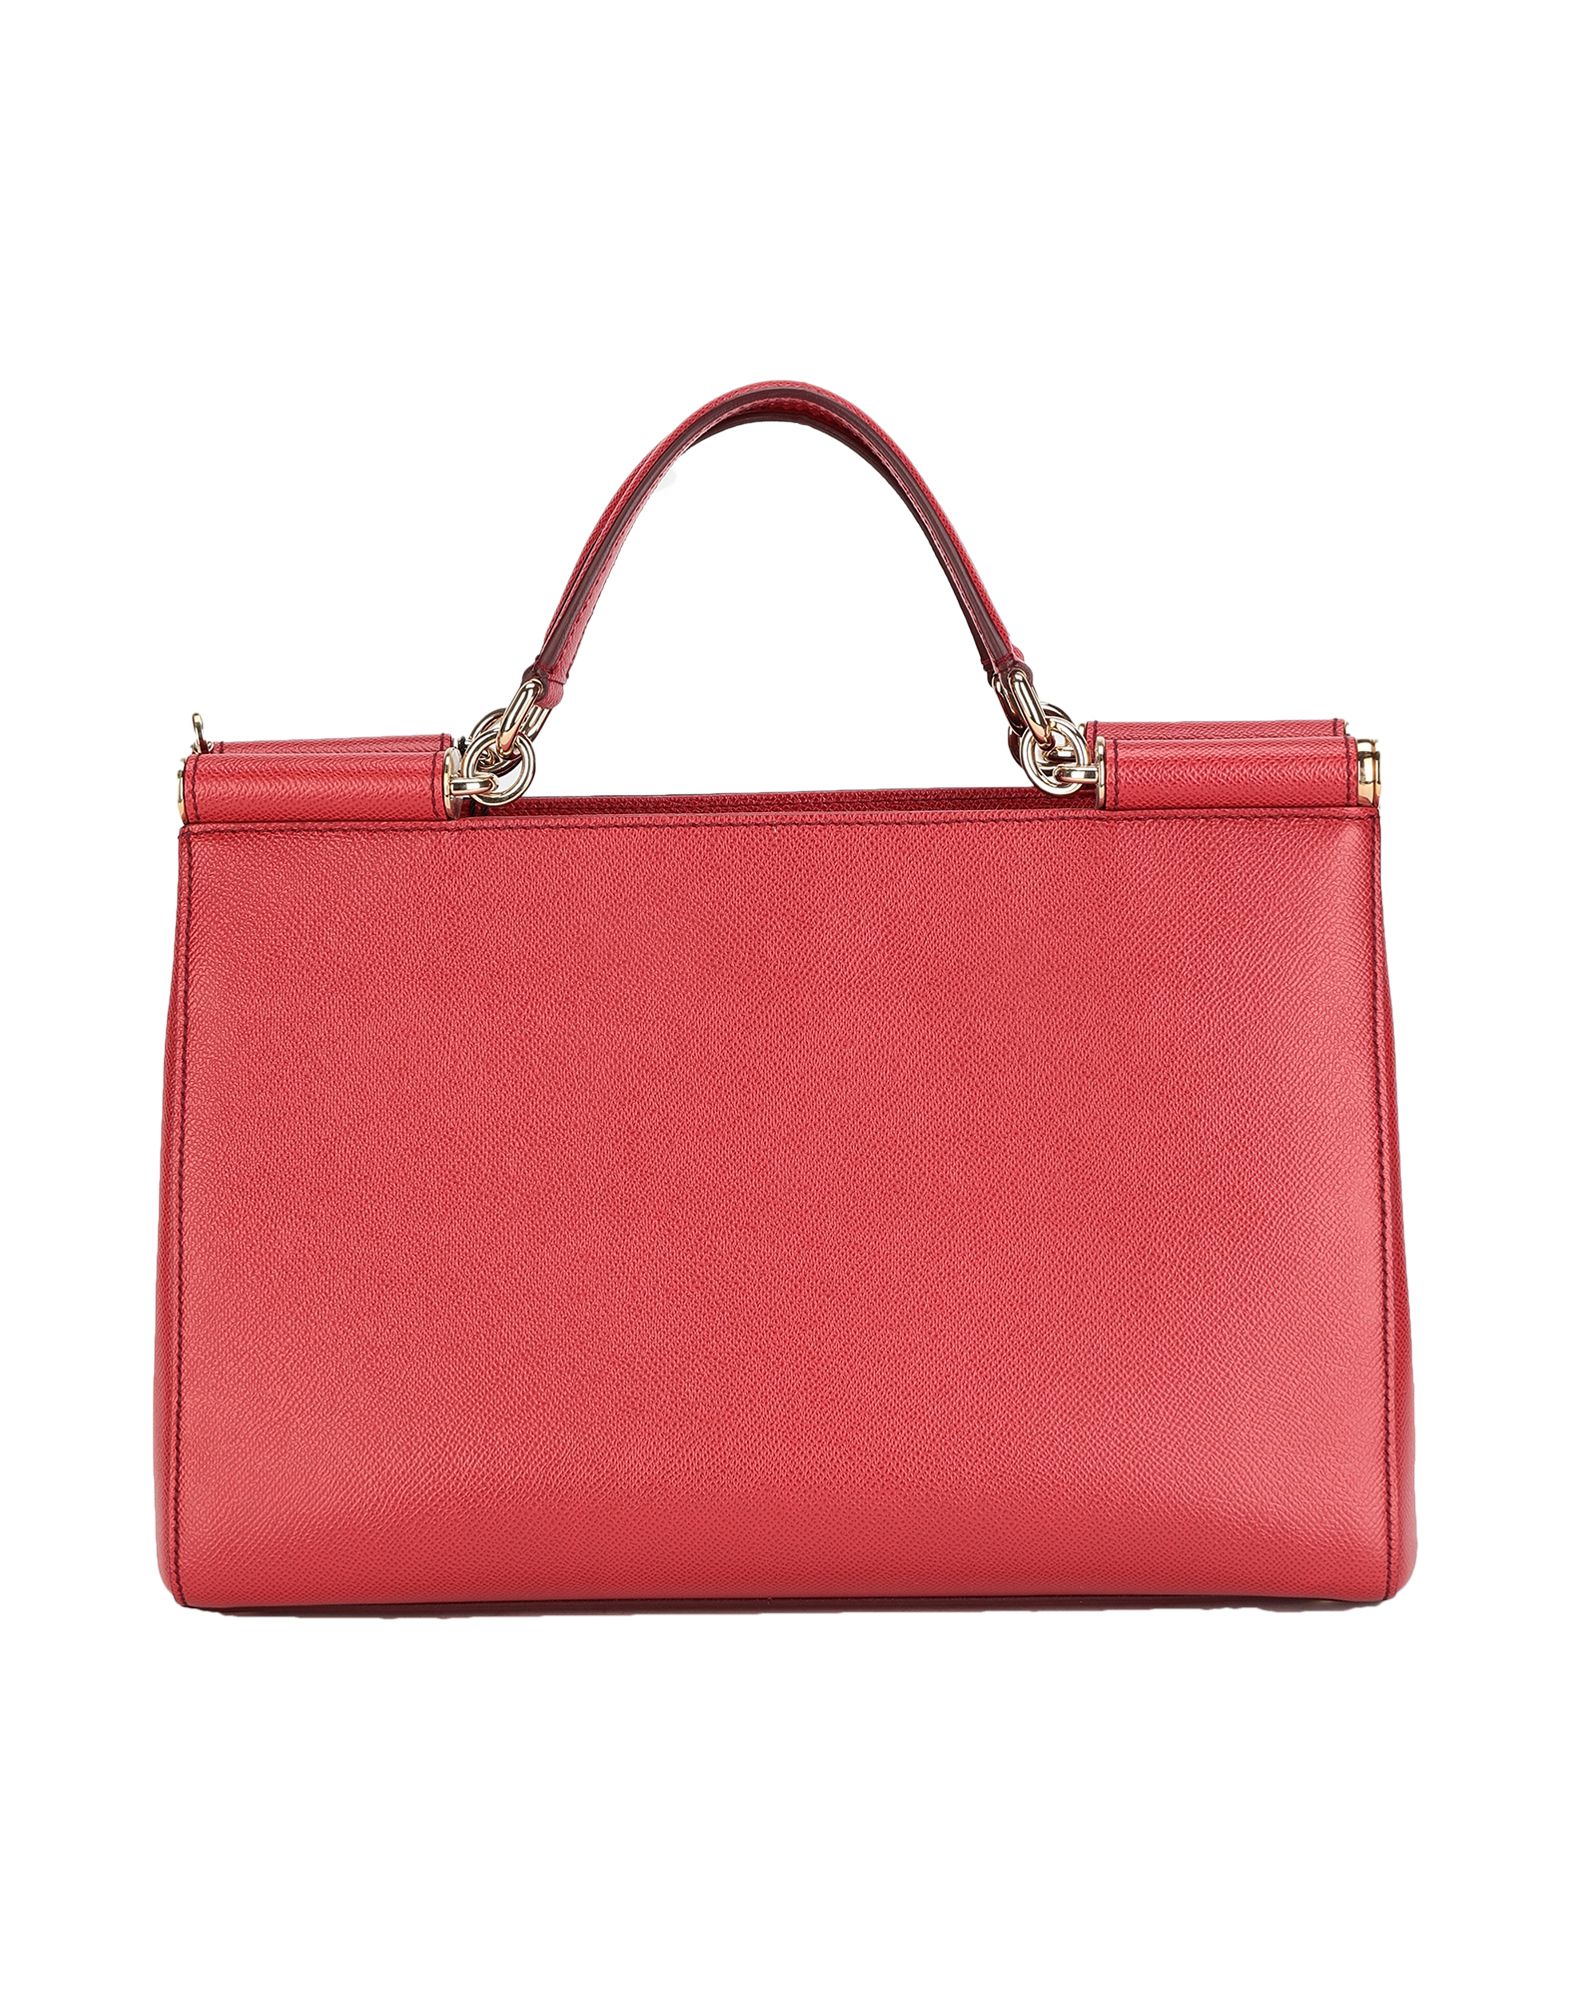 DOLCE & GABBANA Handbags - Item 45323972